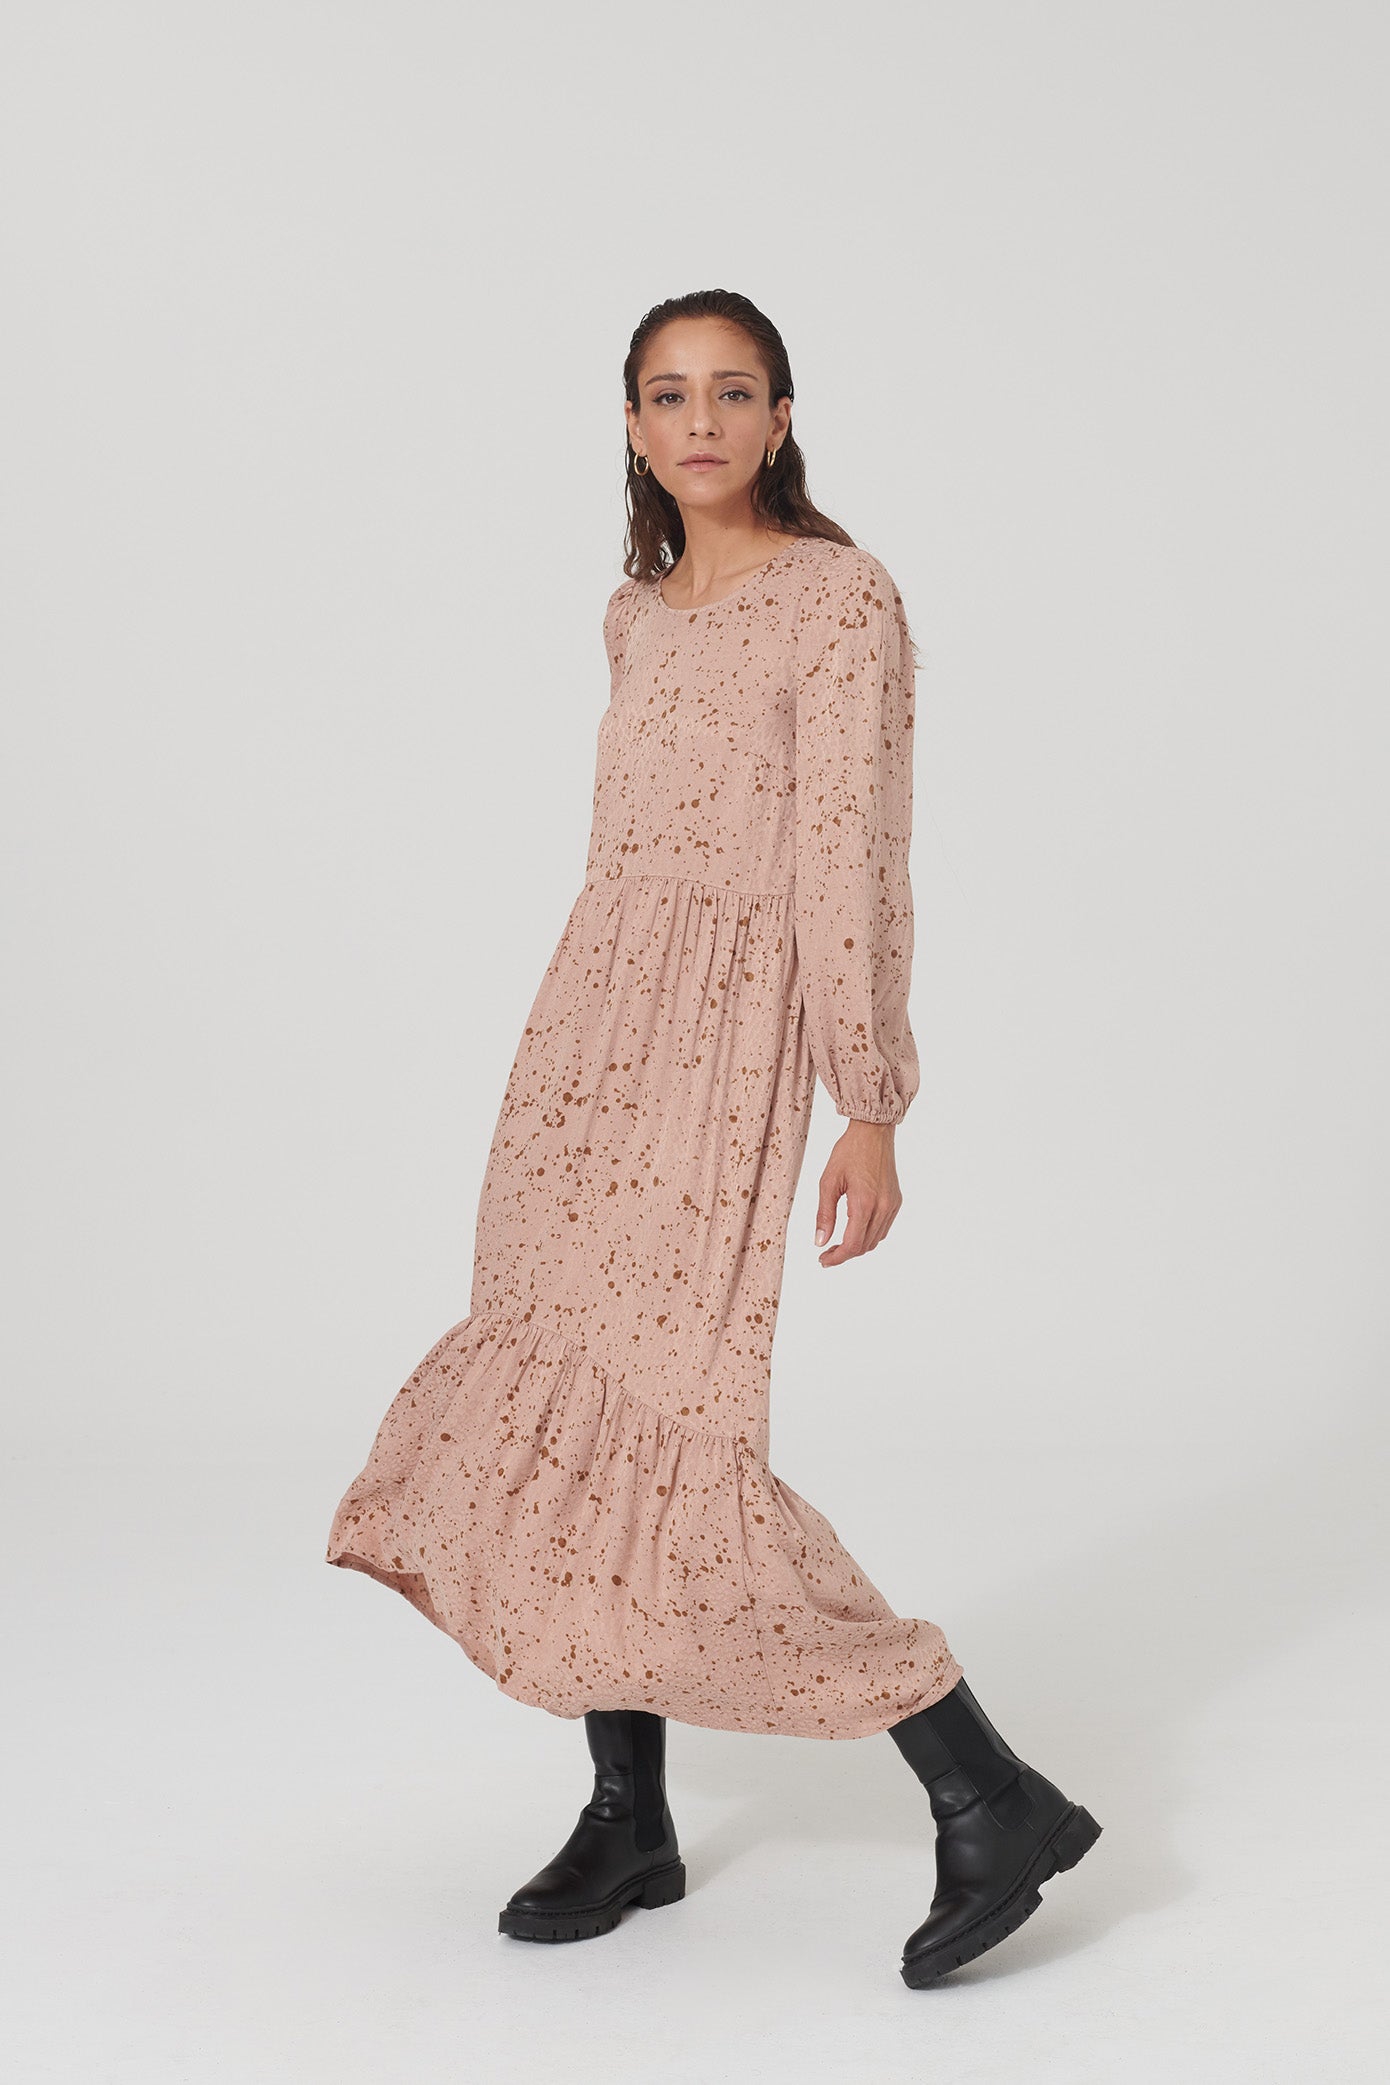 Dress AUDREYANA light patterned by LOVJOI made of cupro and Ecovero™